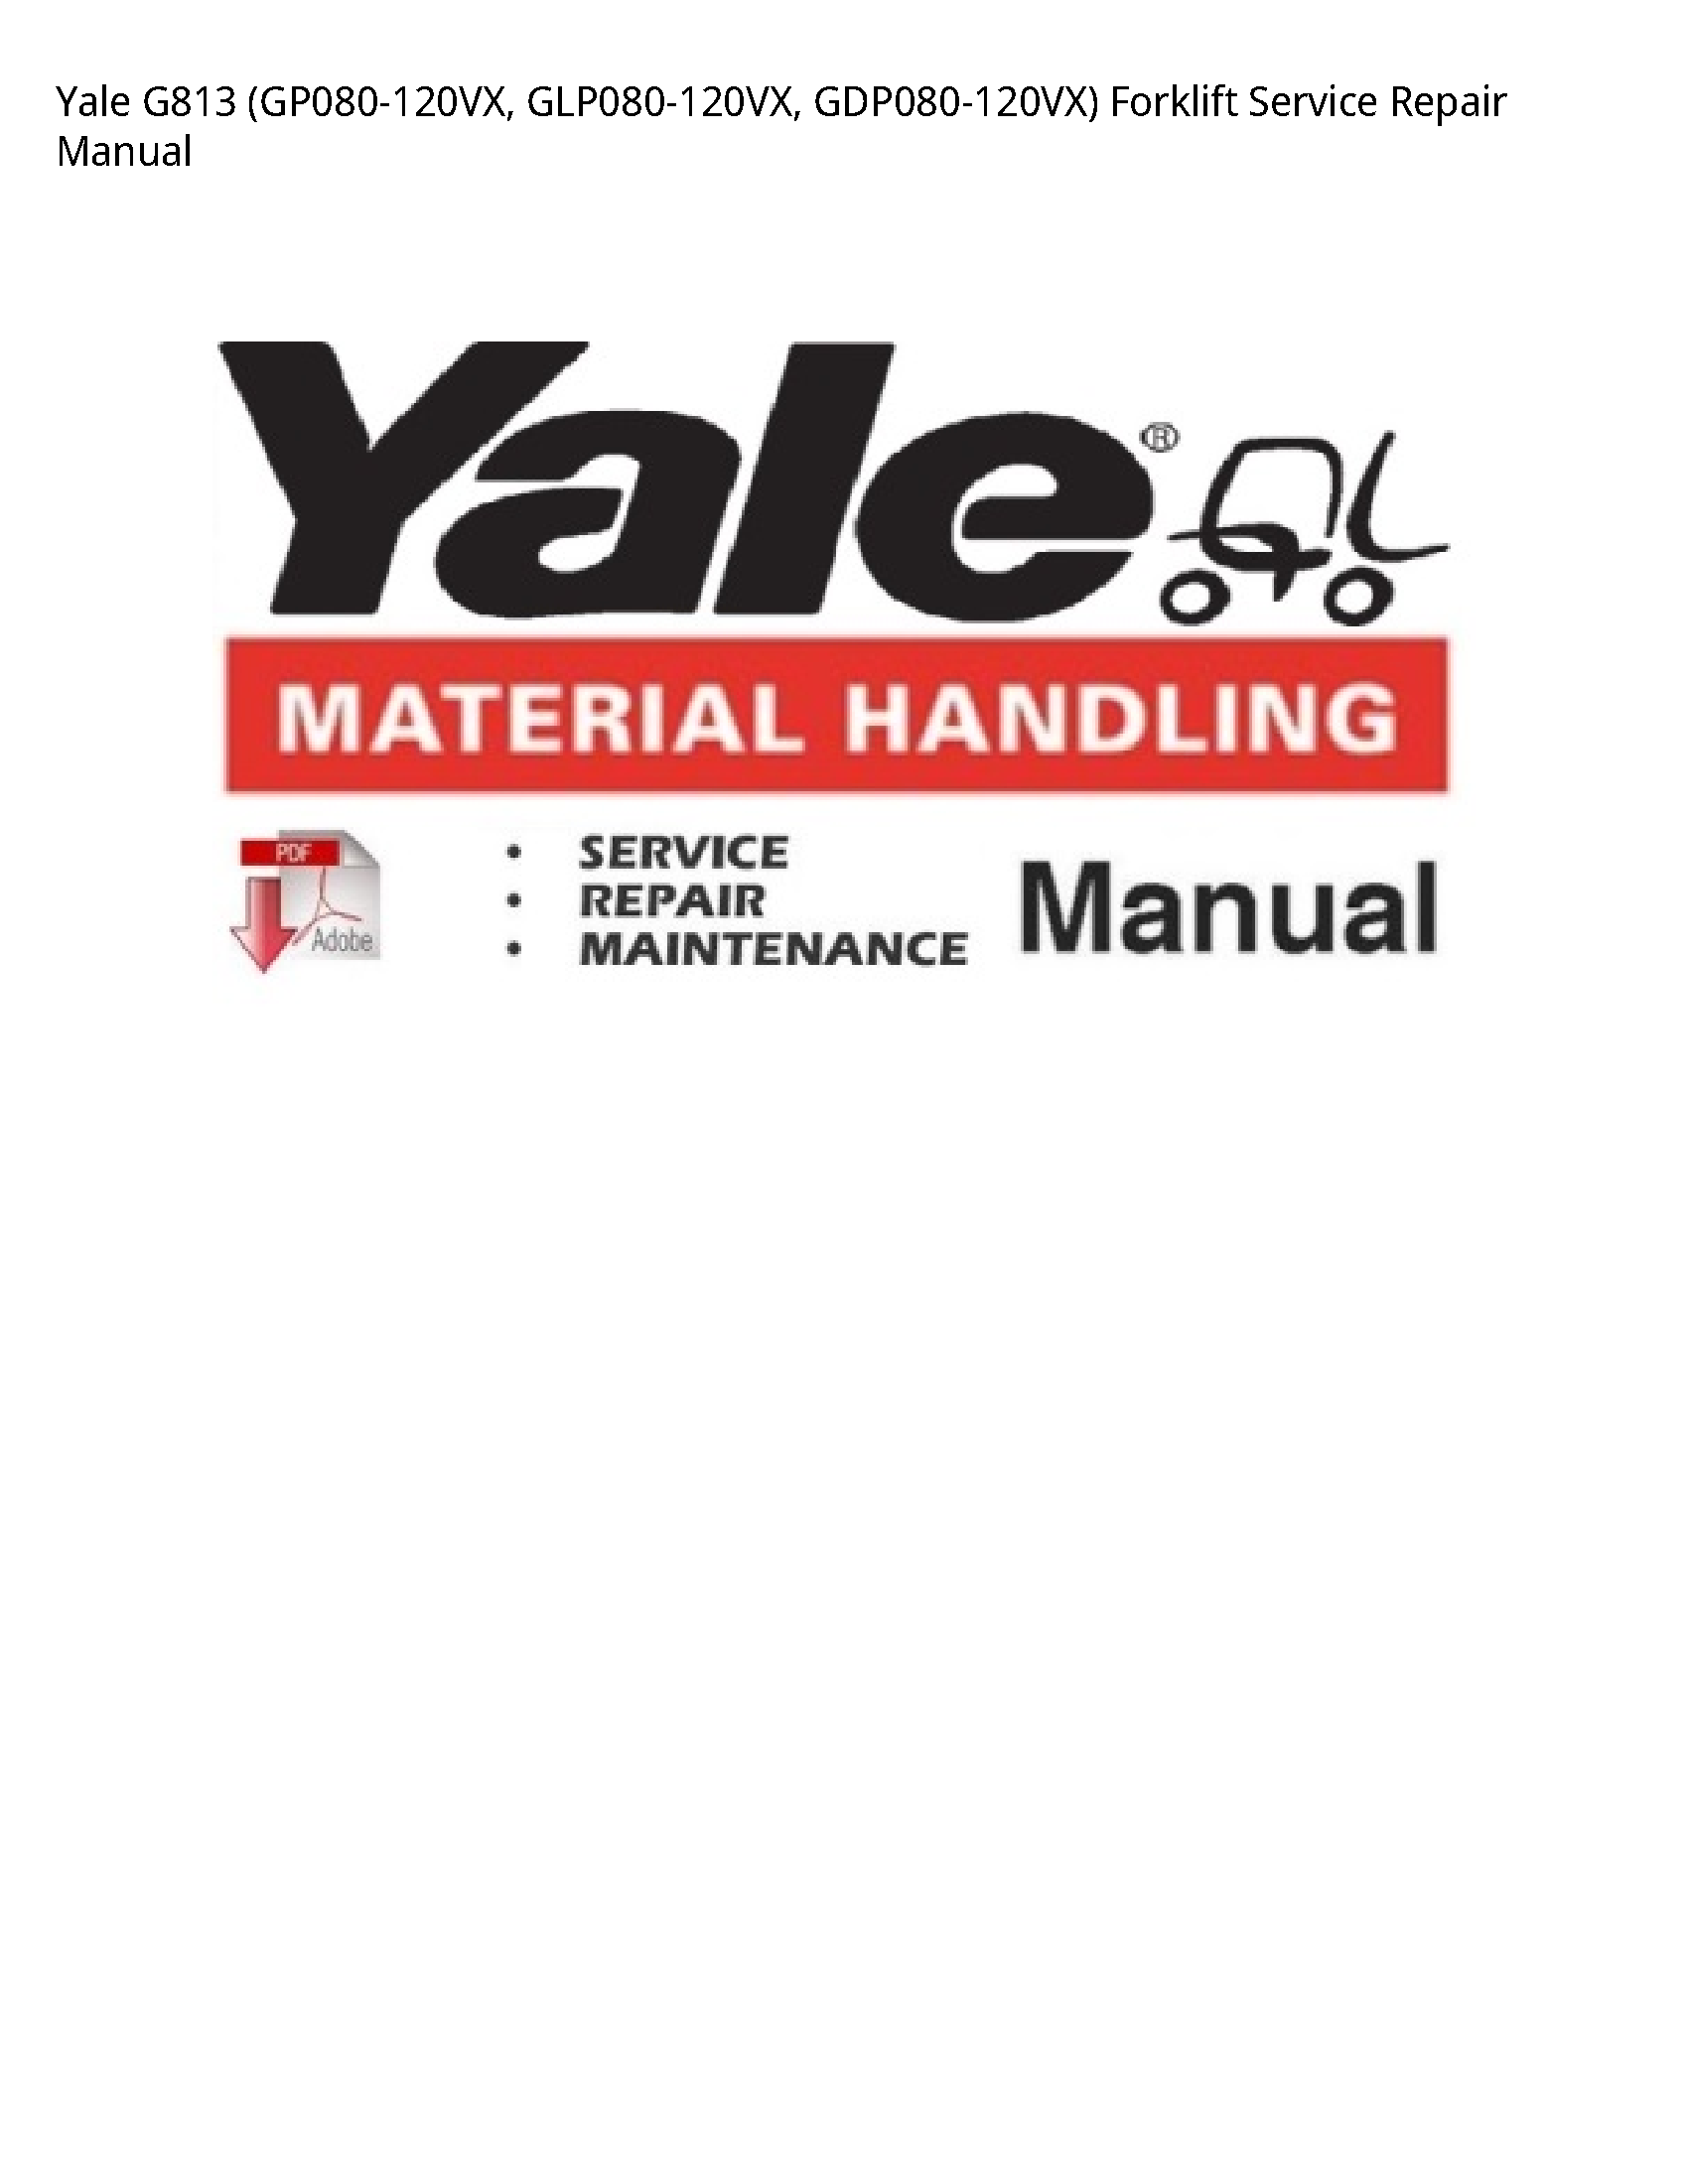 Yale G813 Forklift manual